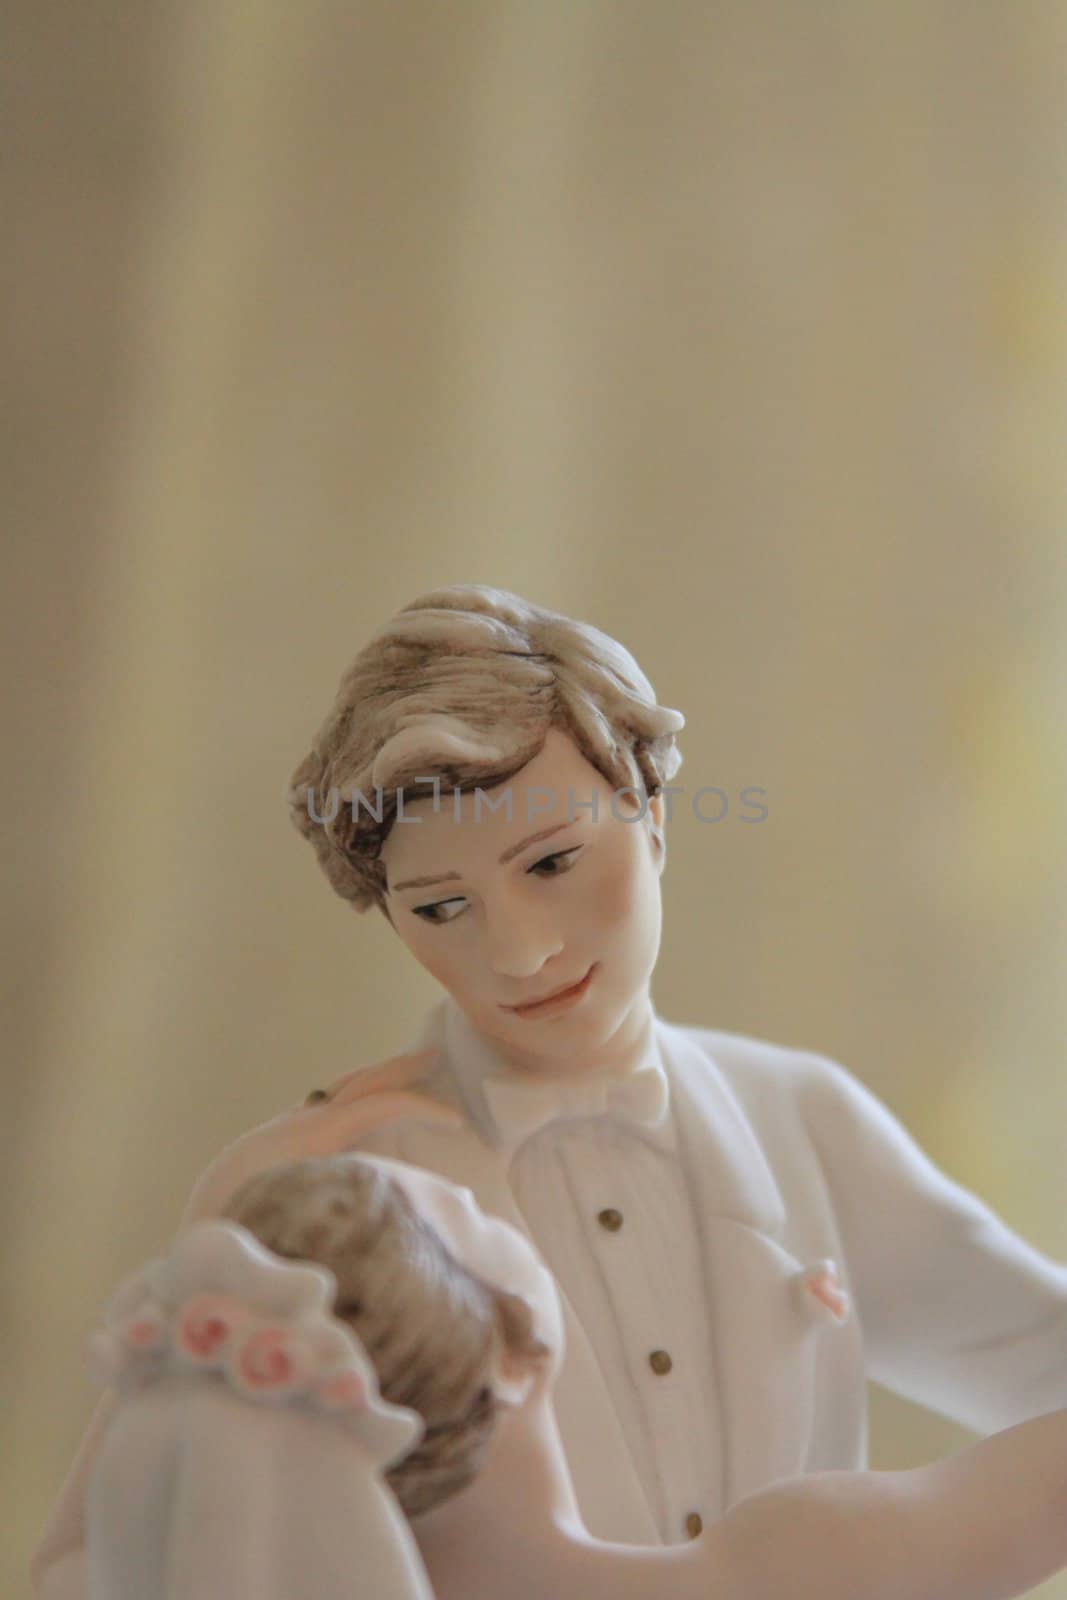 Wedding Figurines by MichaelFelix